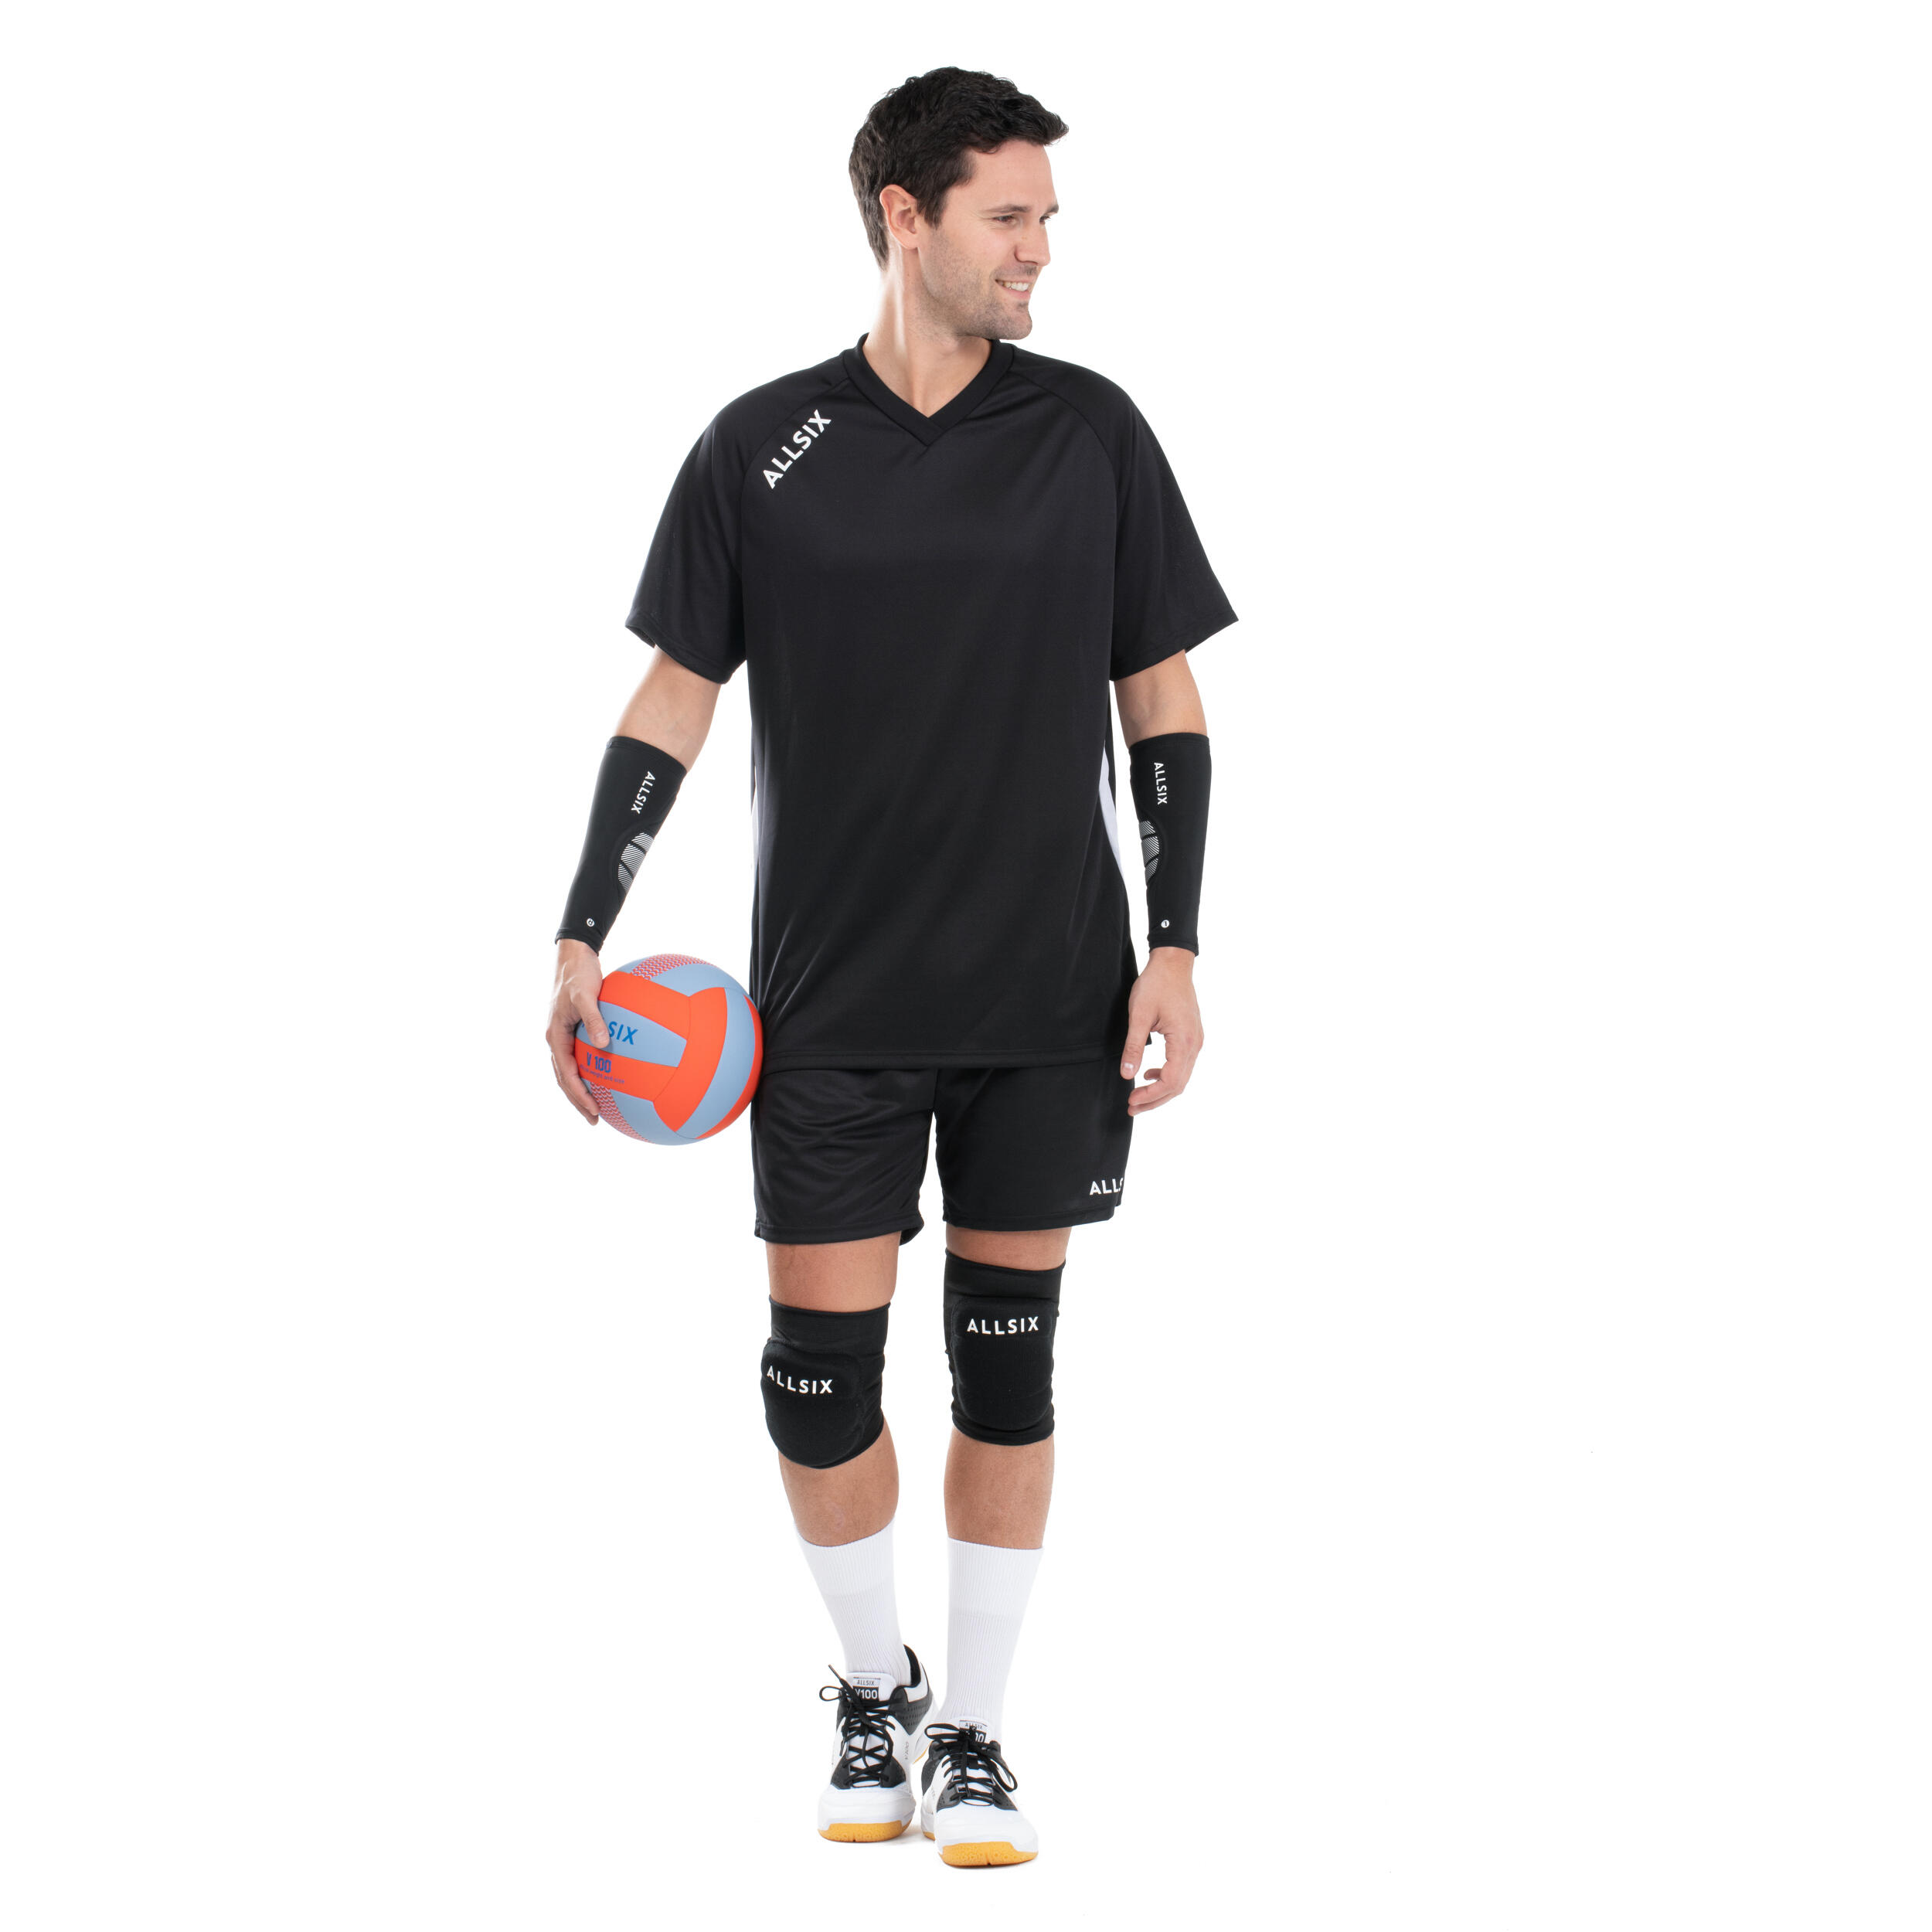 VAP100 Volleyball Sleeves - Black 7/19